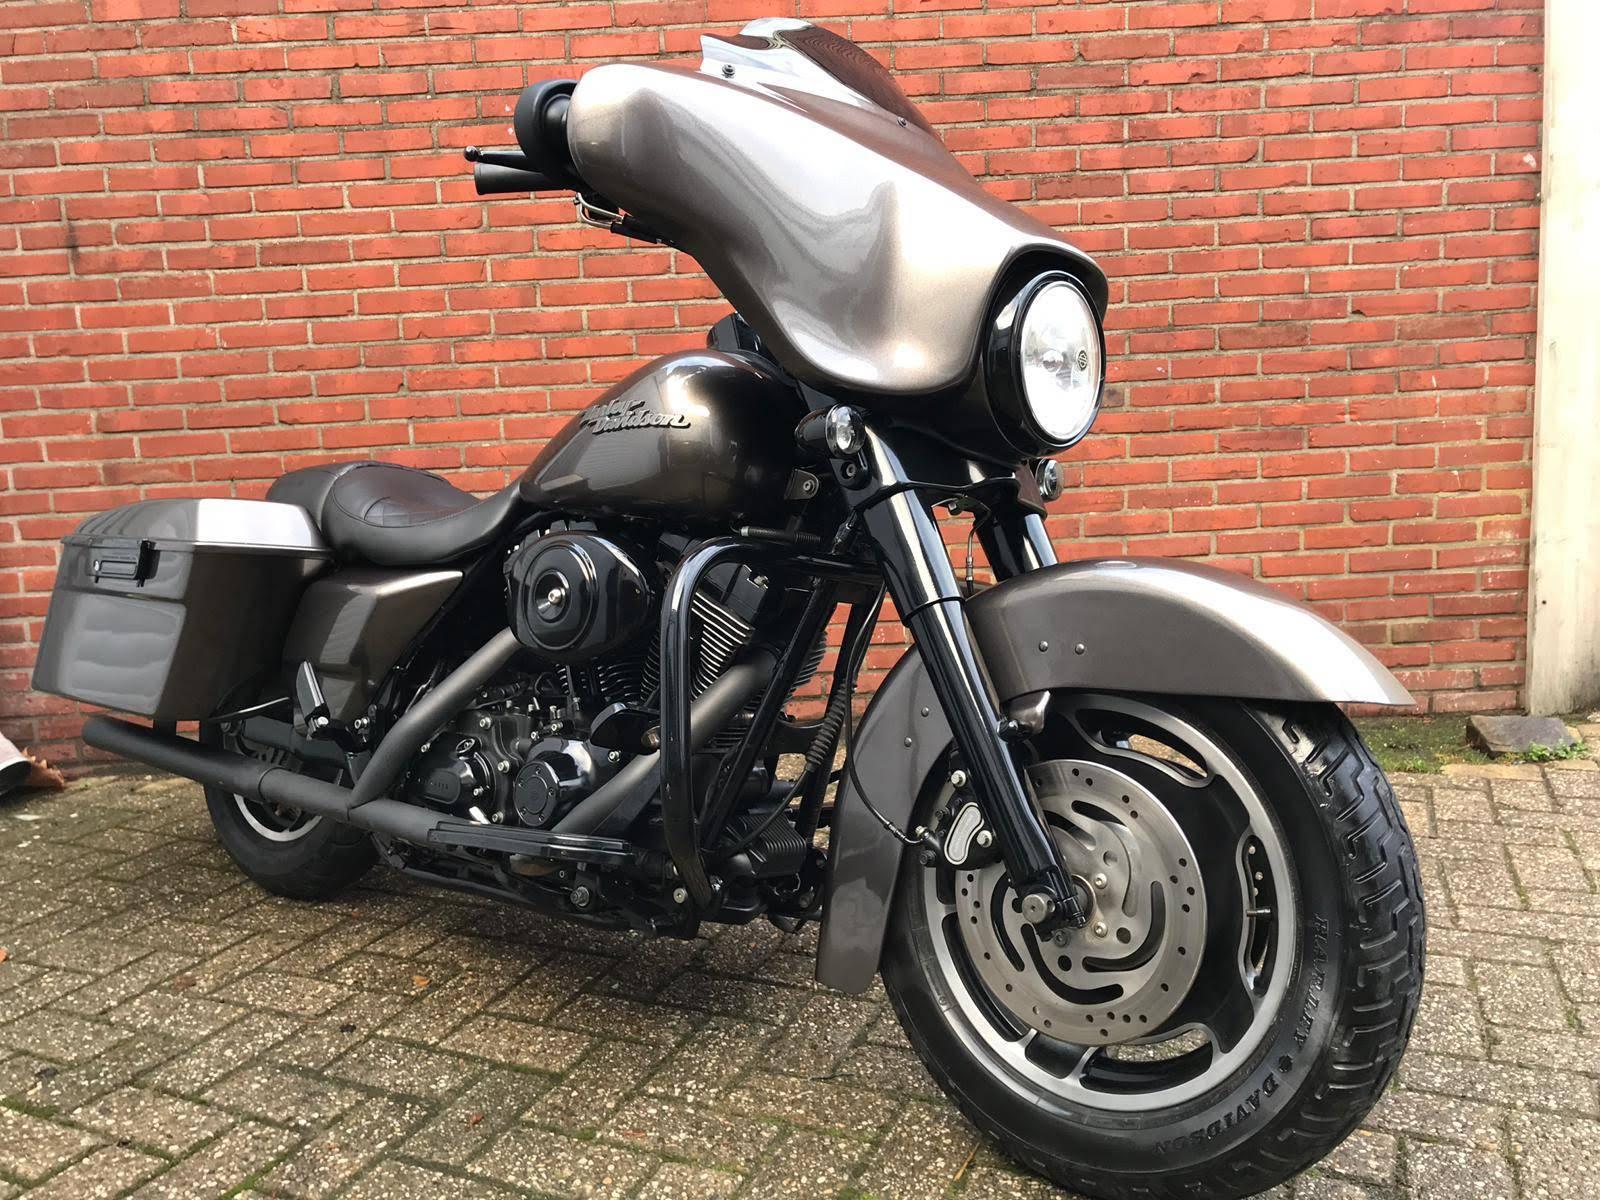 Harley Davidson FLHX Street glide (23661c86c3eb45959.19416164.jpg)